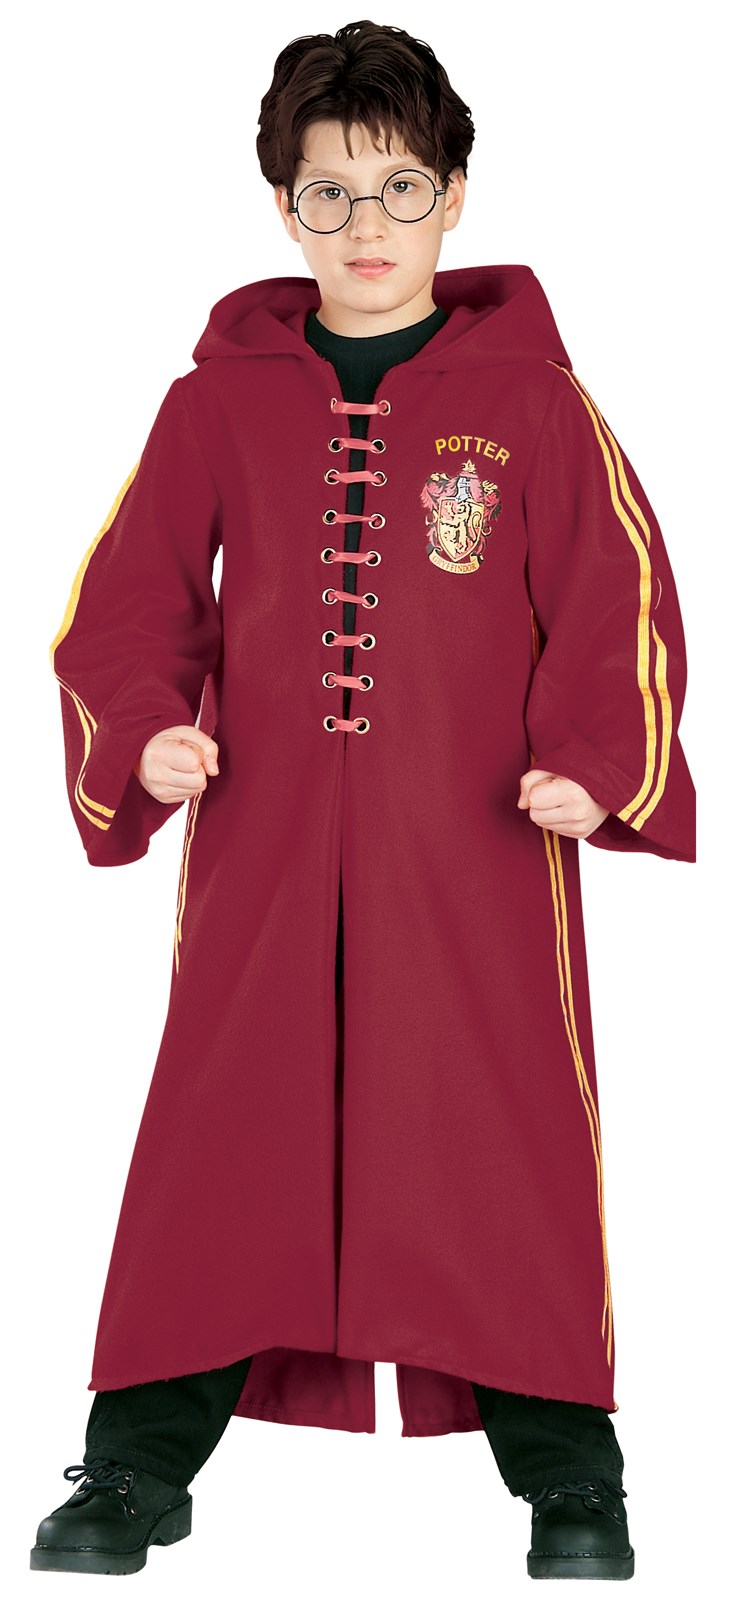 Harry Potter  Quidditch Robe Super Deluxe Child Costume